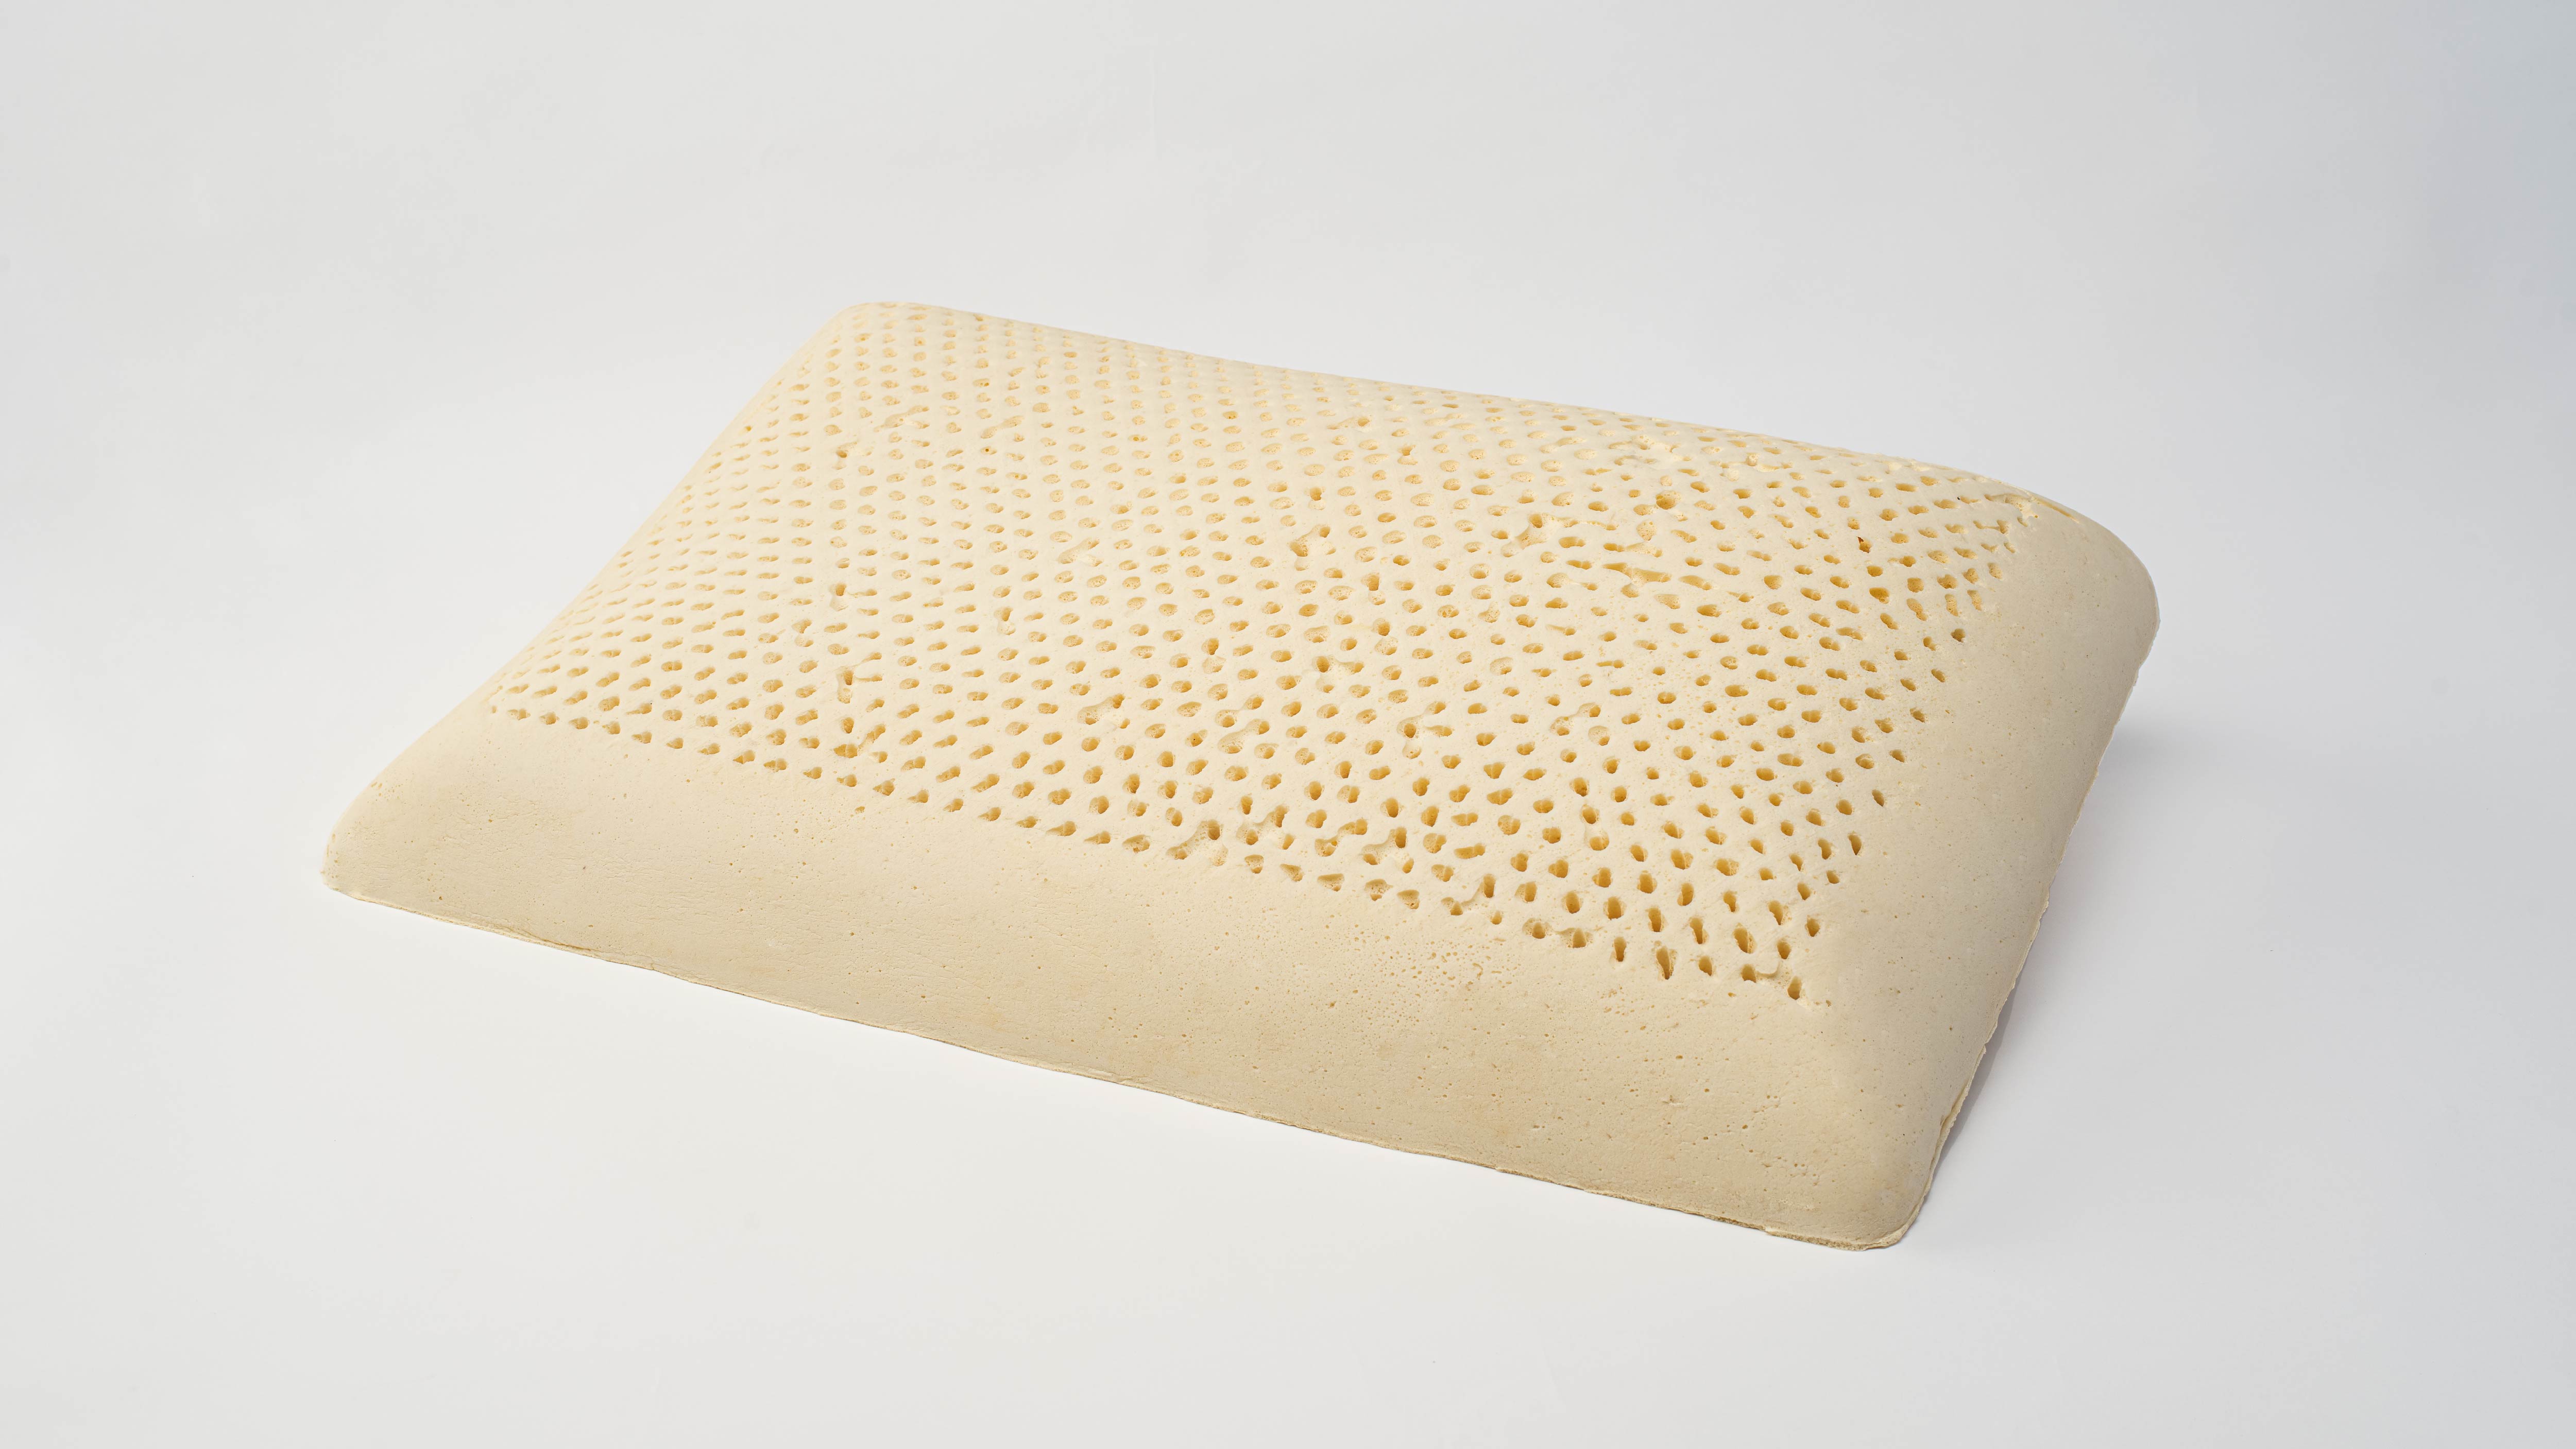 MM Foam Dexxa 100% Organic Natural Latex D Curve Pillow